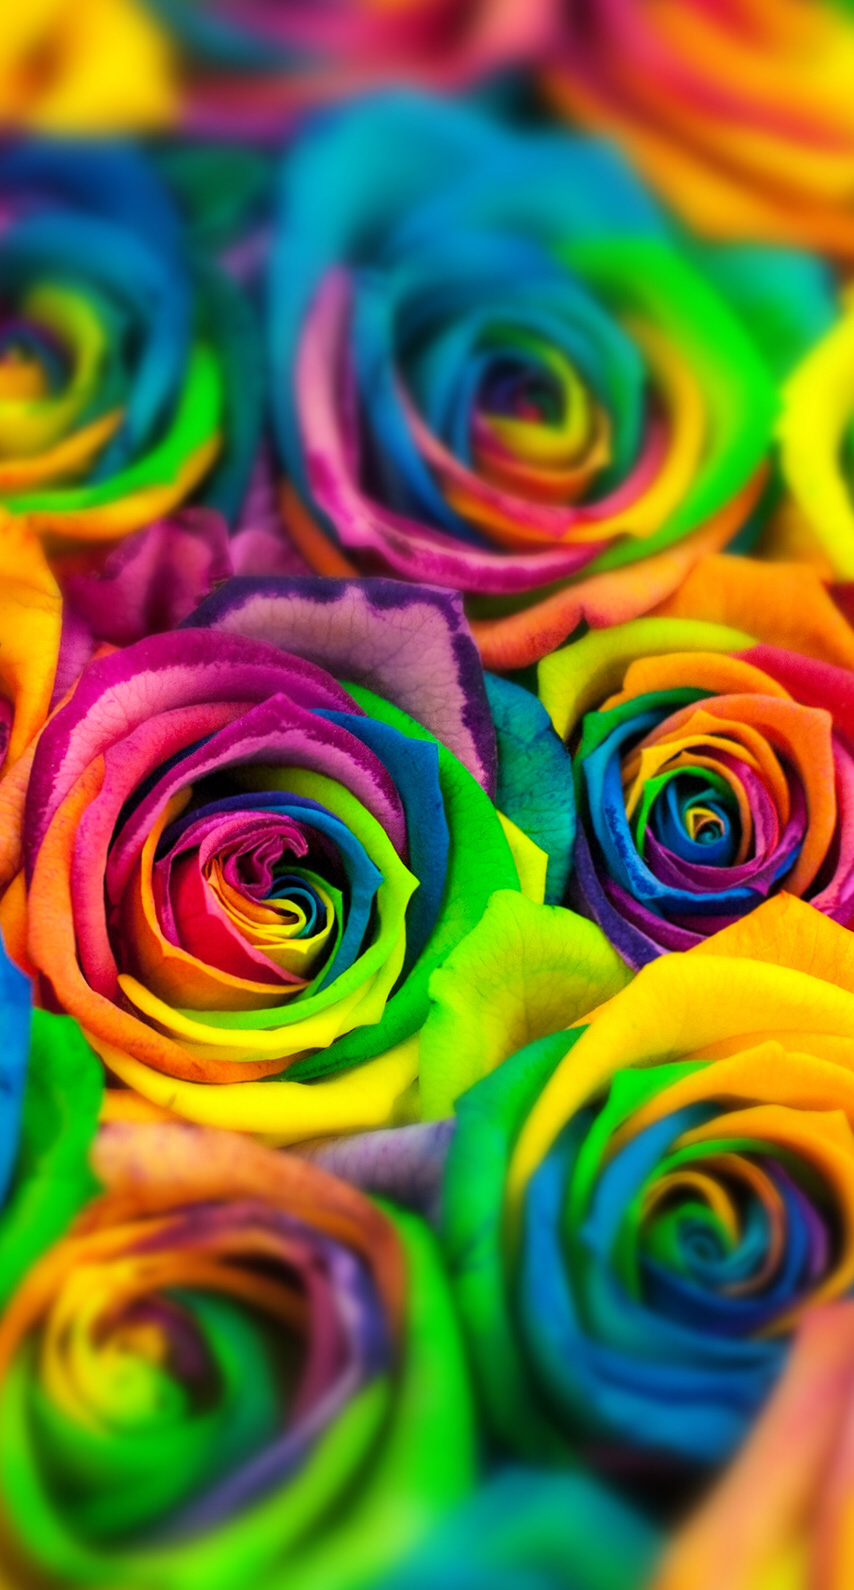 #tumblr. Flowers photography wallpaper, Rainbow wallpaper, Rainbow roses